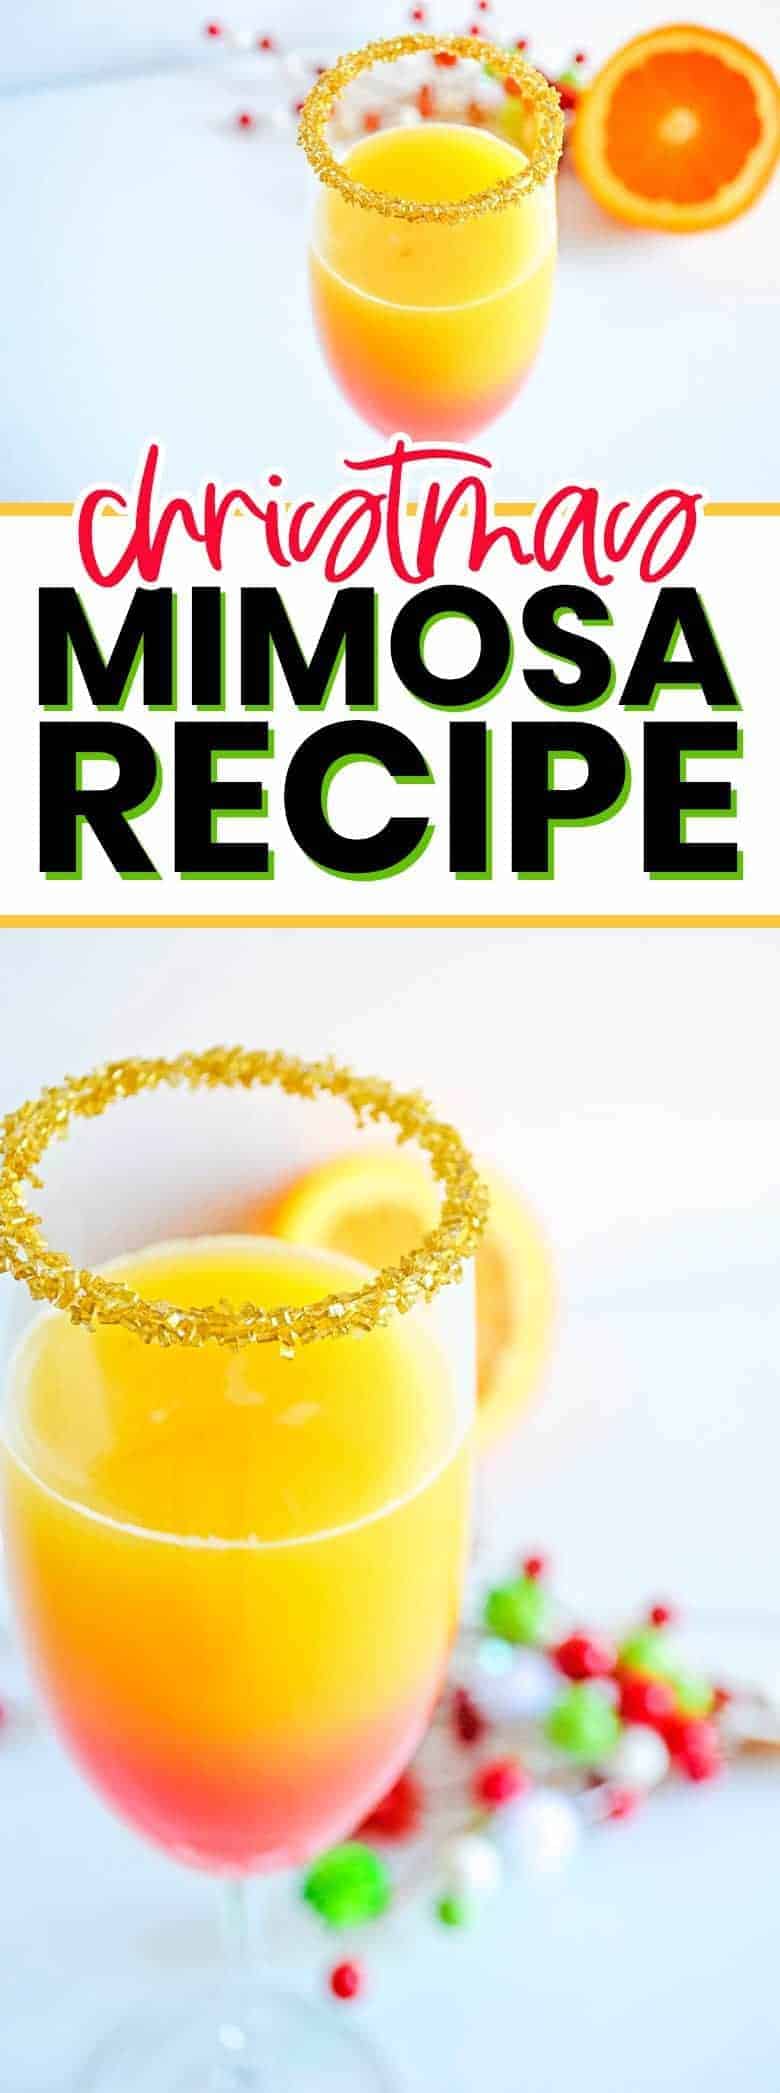 christmas mimosa recipe pinterest image